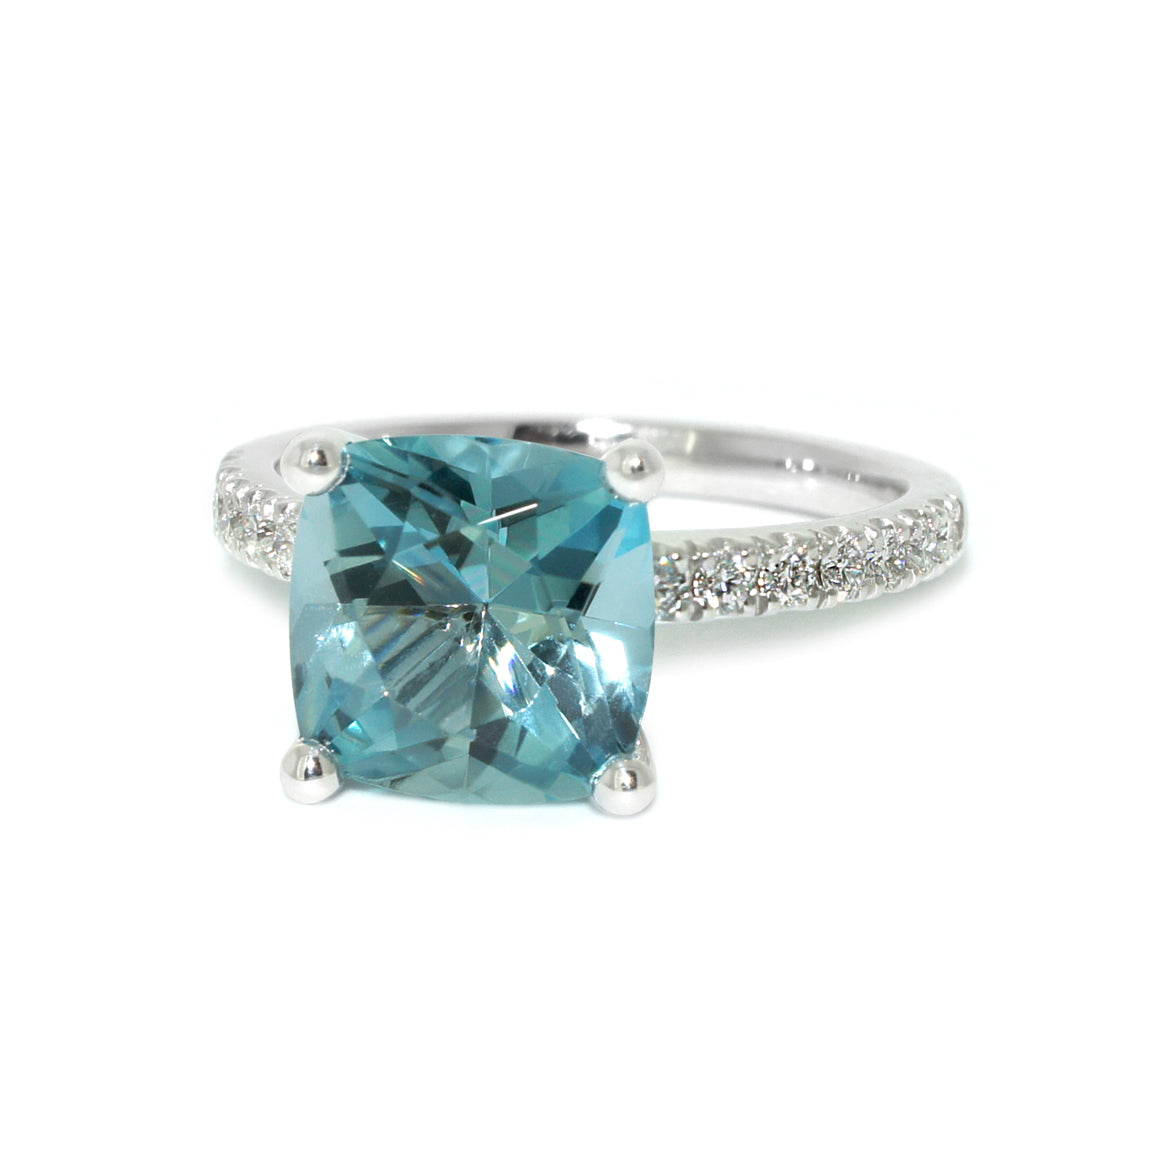 Lumiere-custom-made-engagement-ring-diamonds-white-gold-aquamarine-Lizunova-Fine-Jewels-Sydney-NSW-Australia